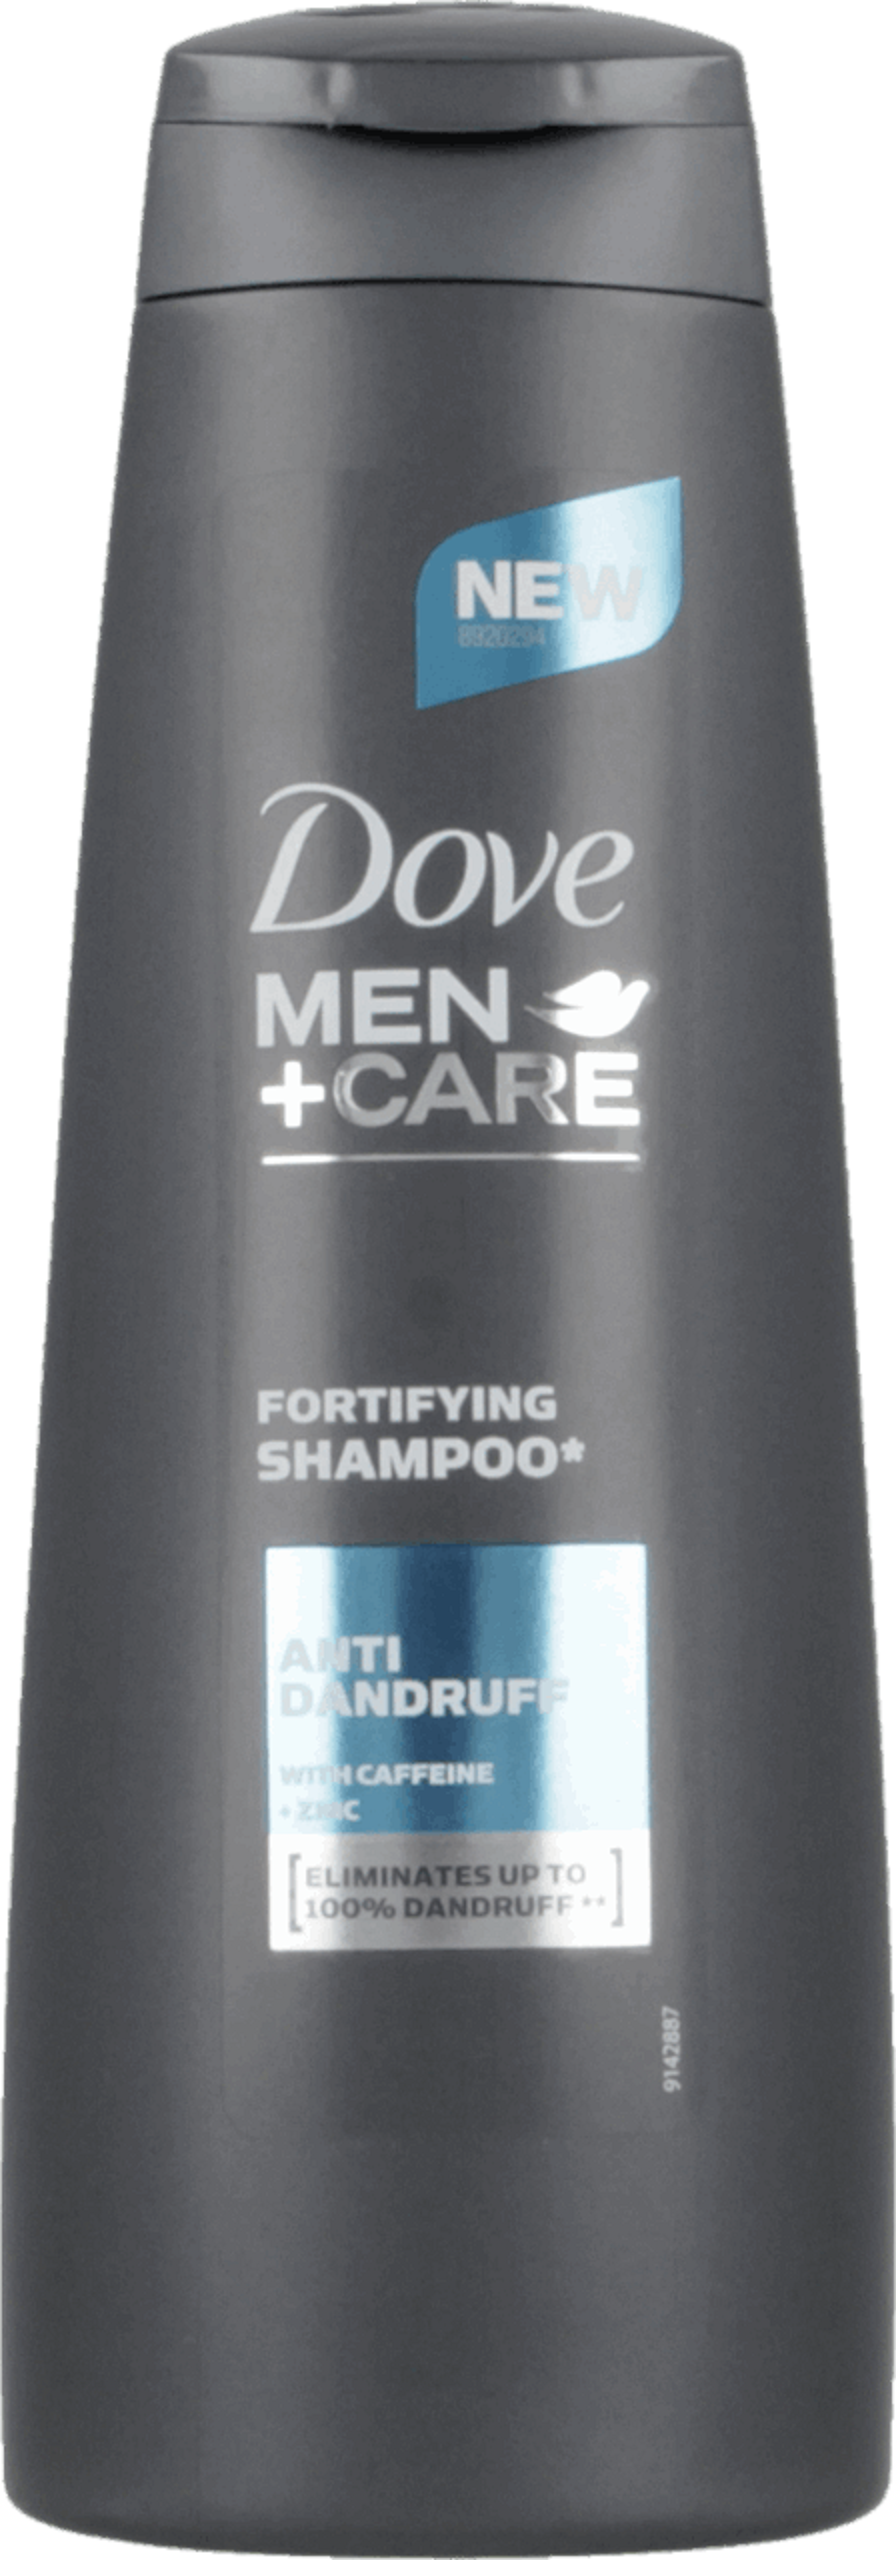 szampon dove men fortifying gdzie kupic